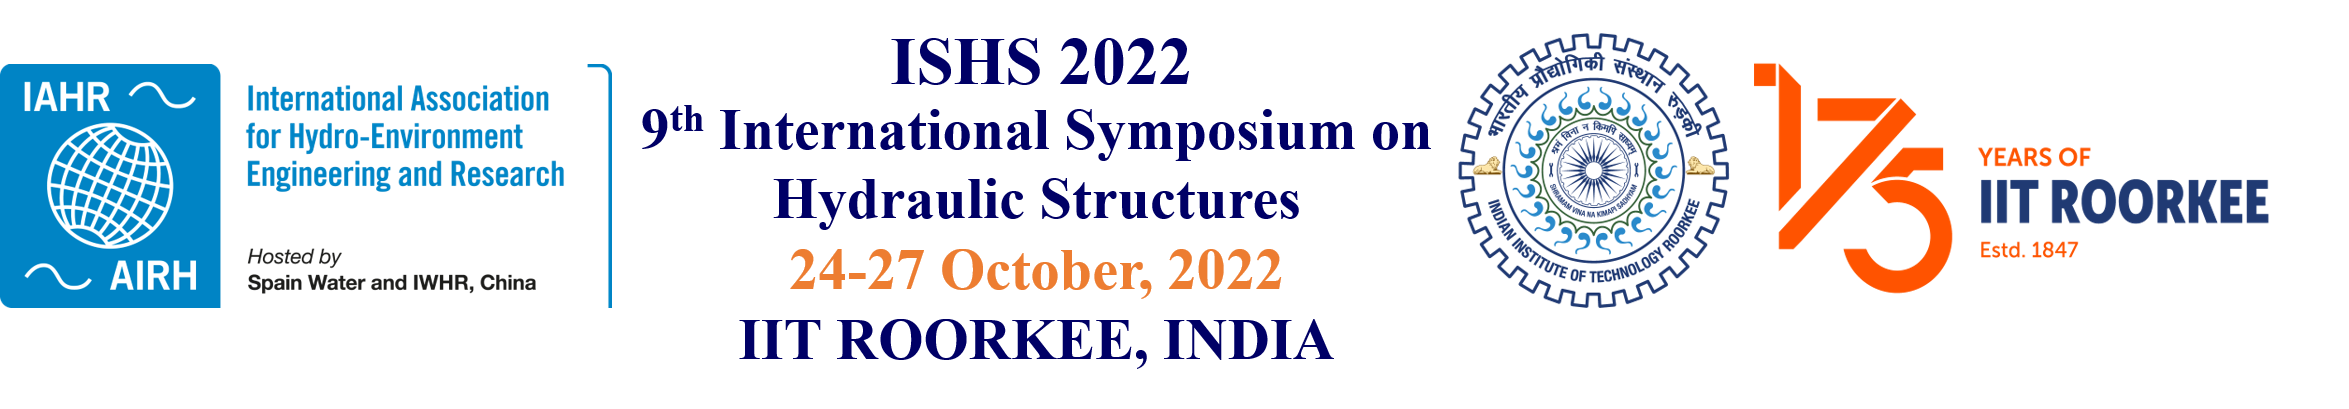 9th International Symposium on Hydraulic Structures